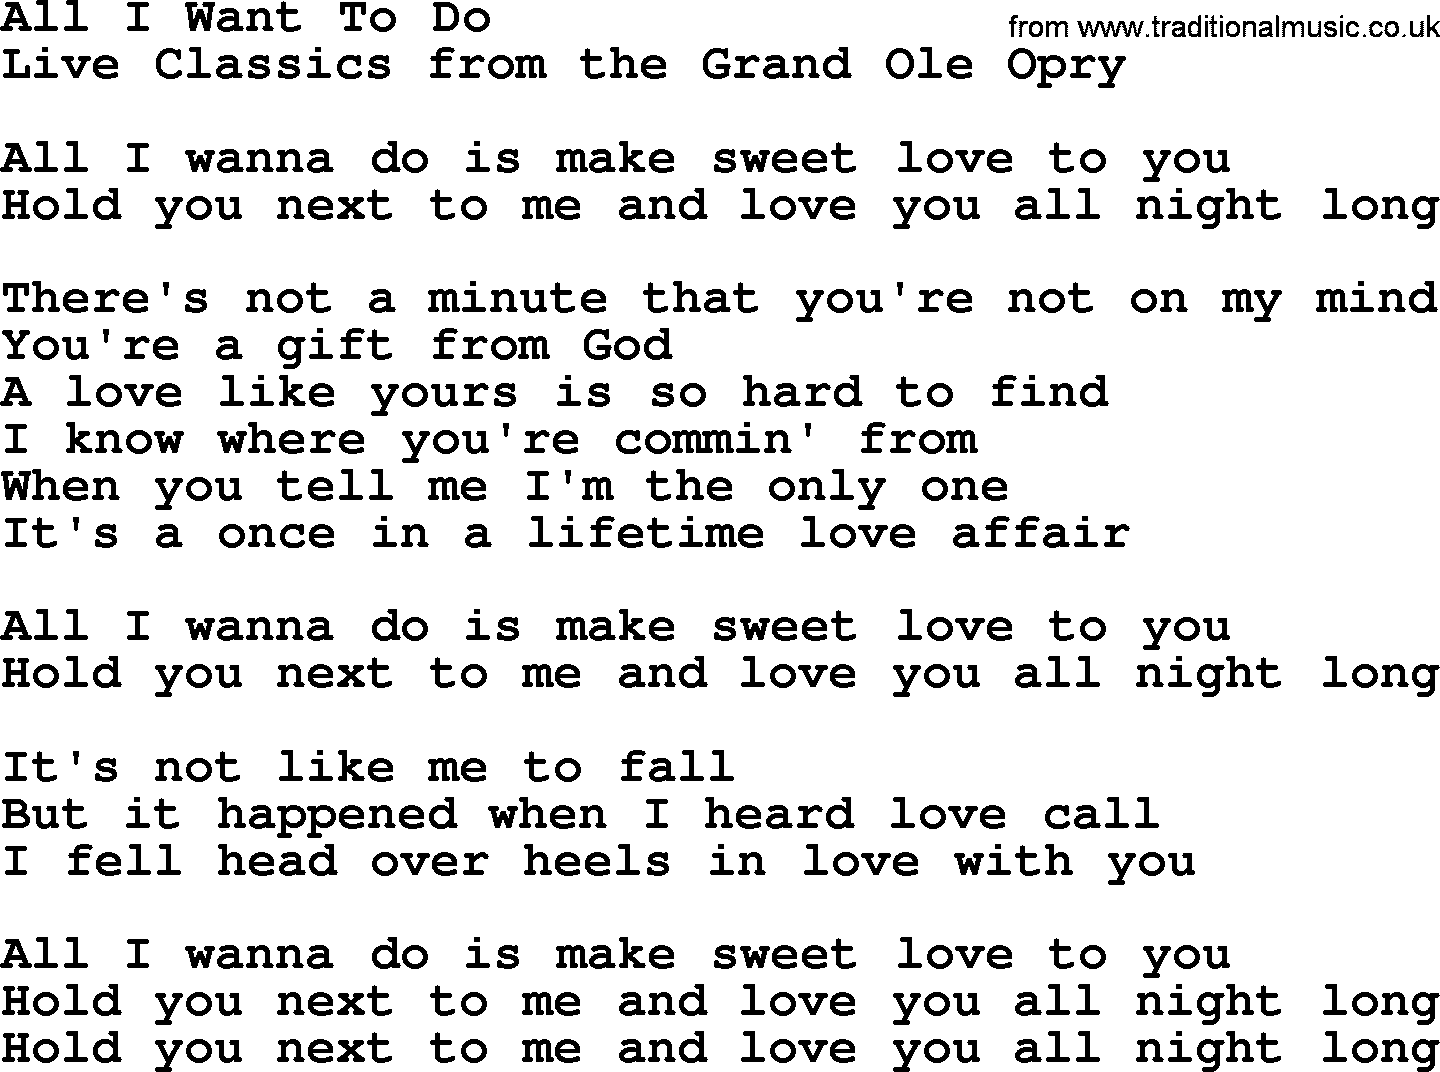 Marty Robbins song: All I Want To Do, lyrics